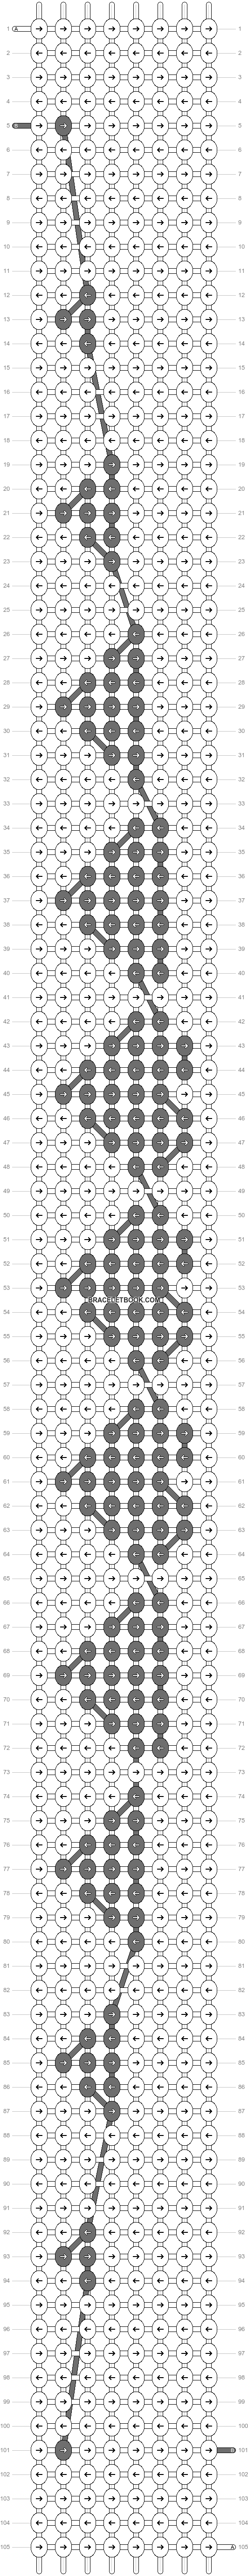 Alpha pattern #21593 variation #36258 pattern